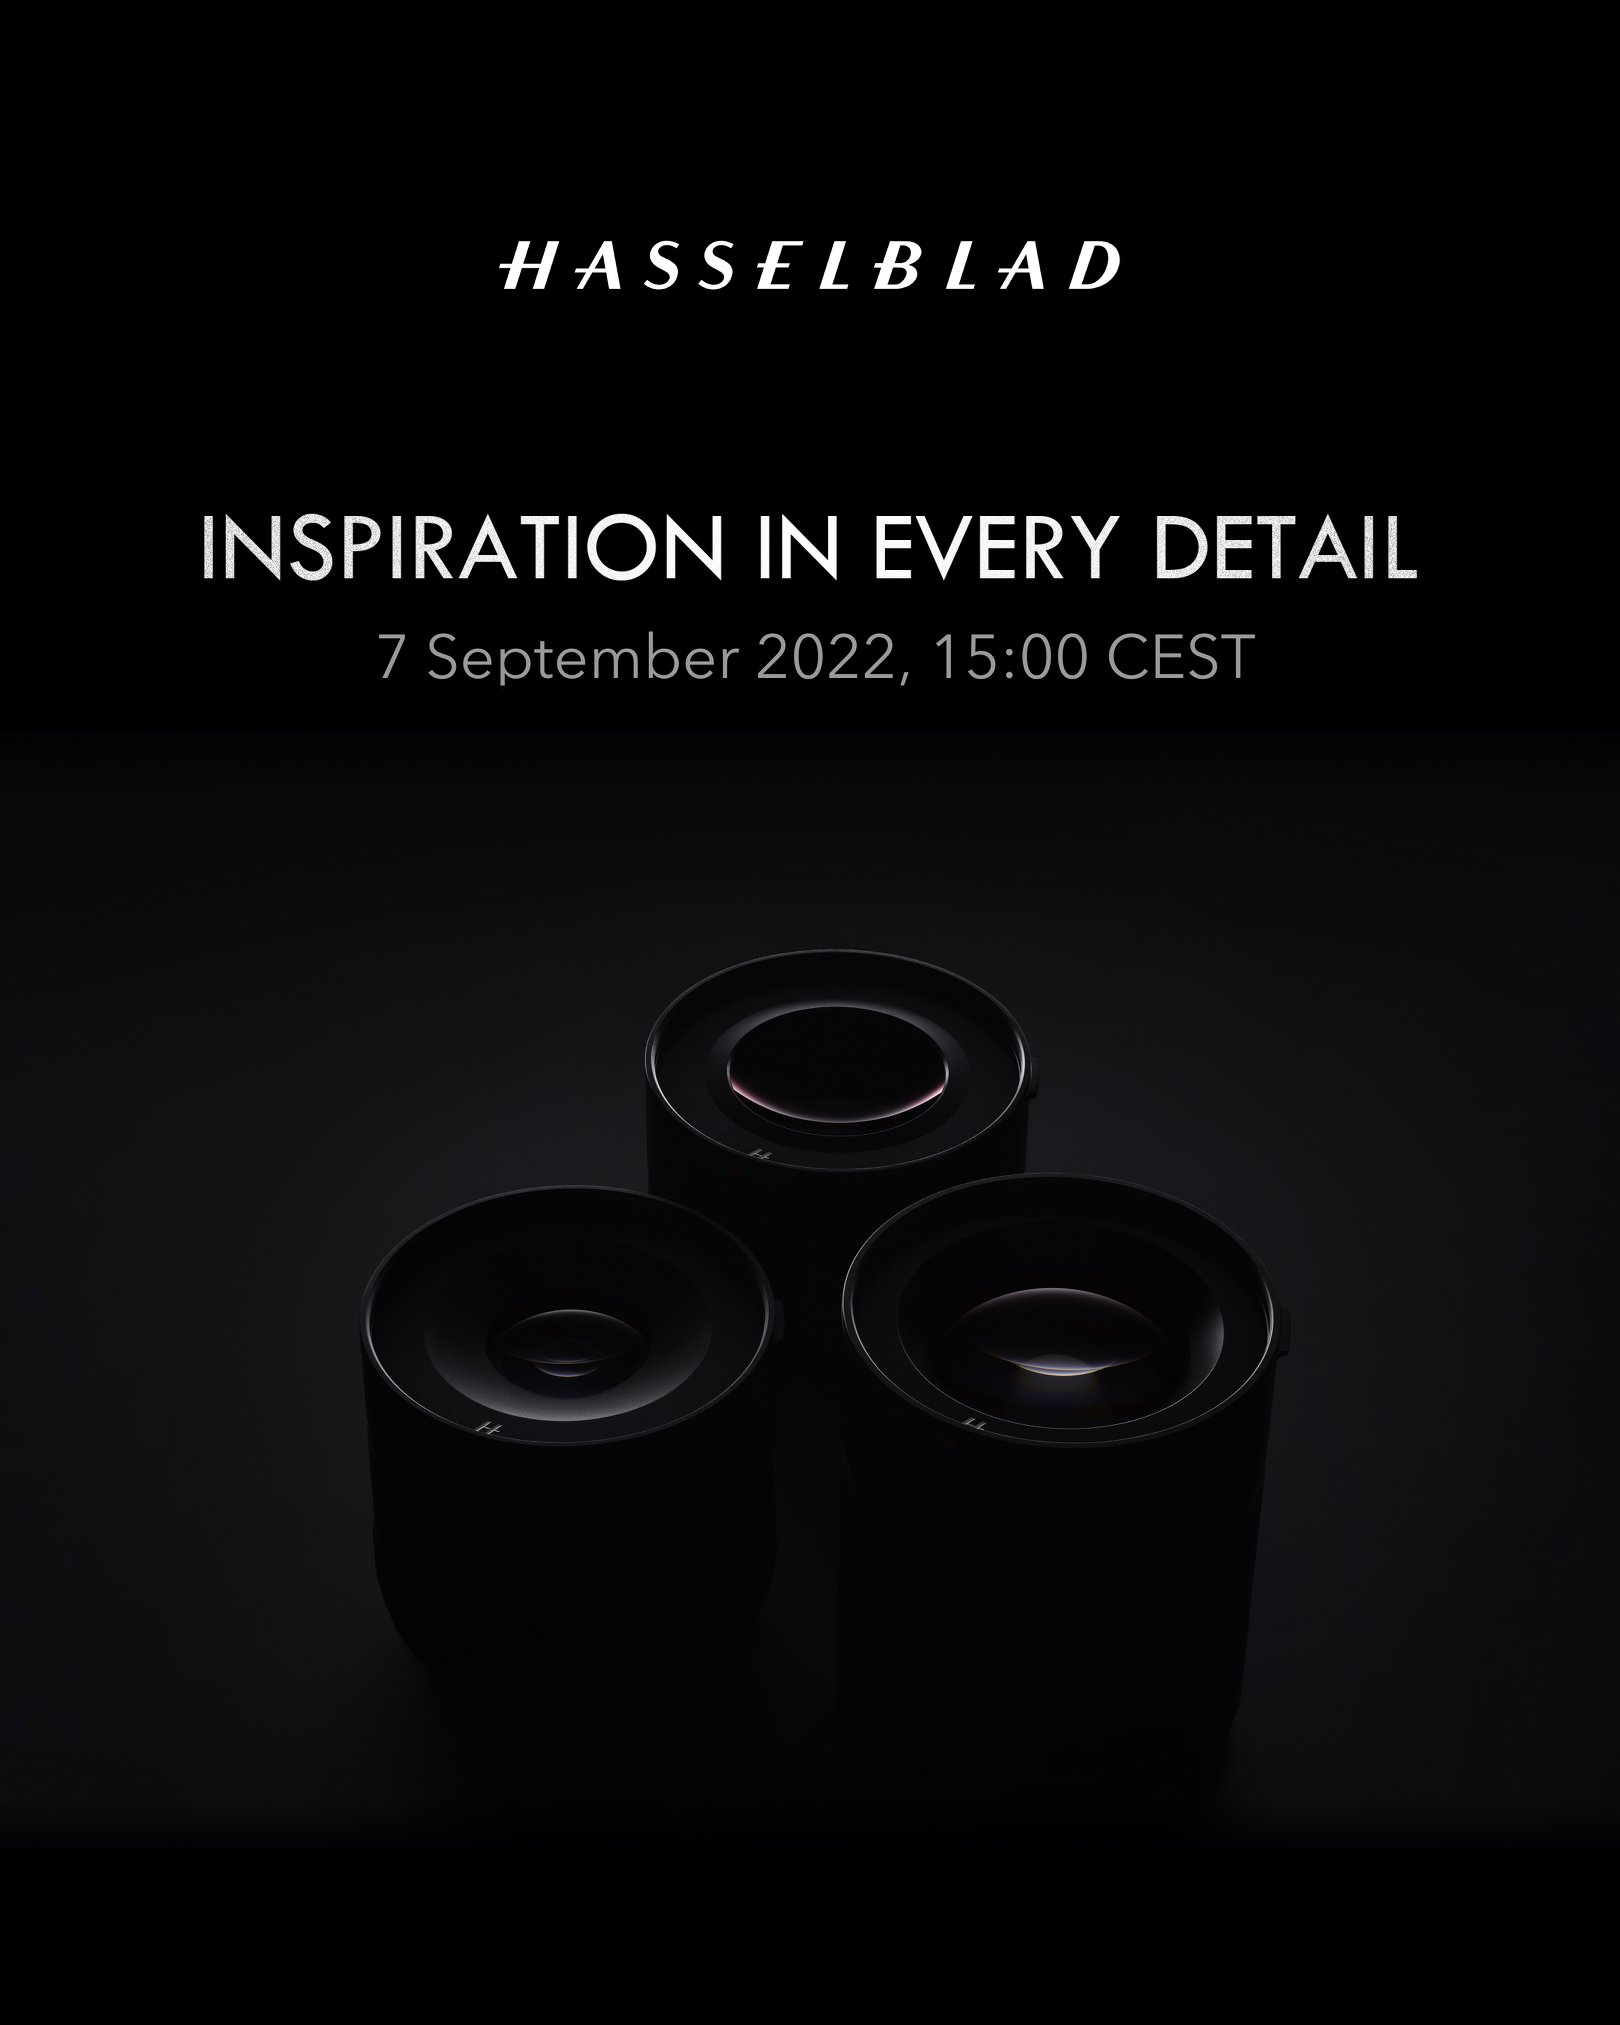 Hasselblad live event